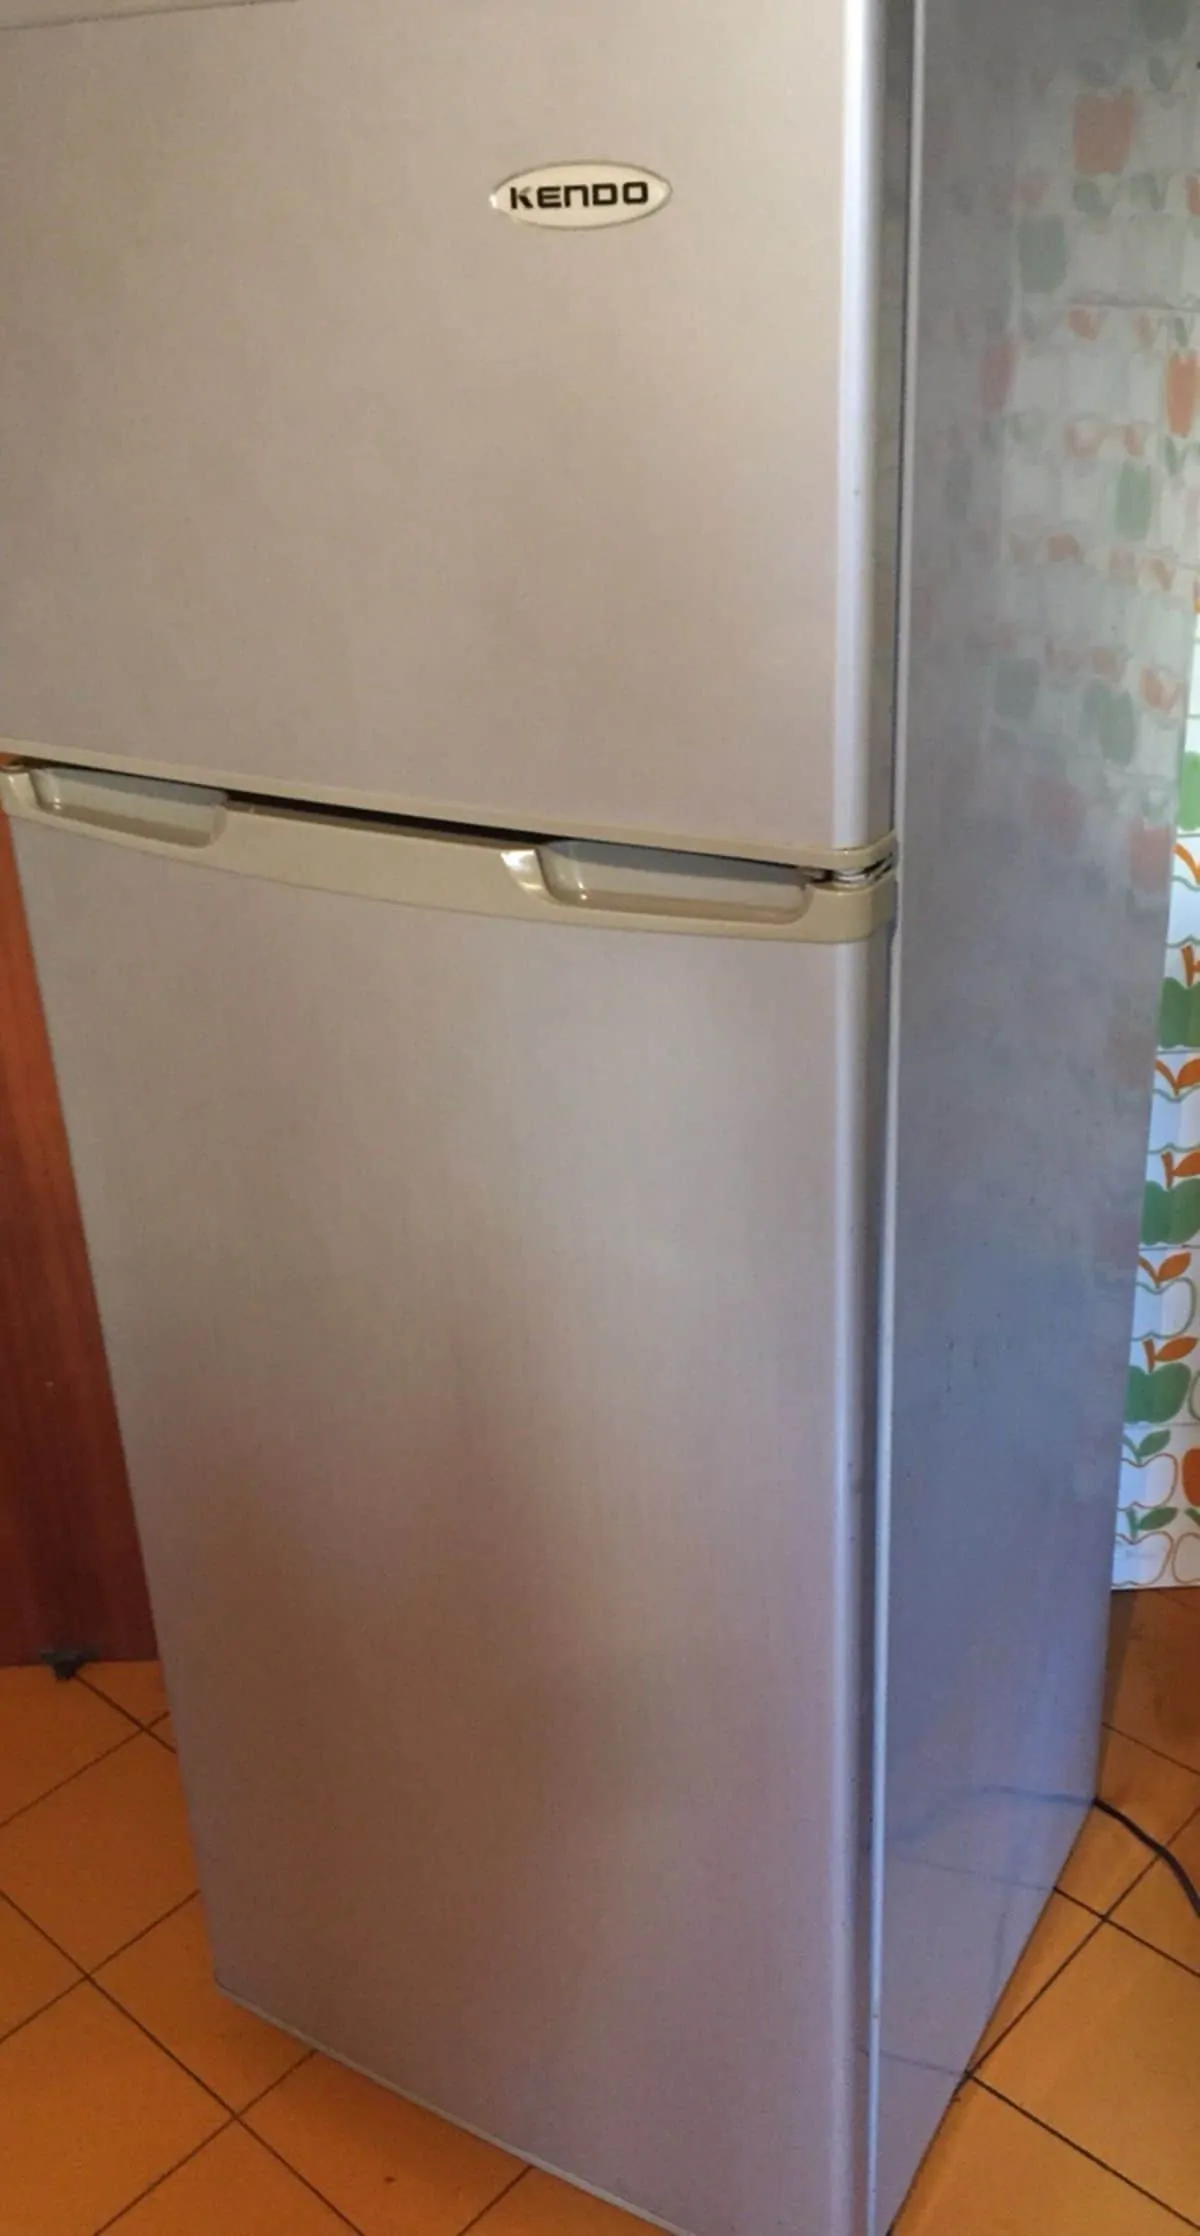 kendo frigoriferi